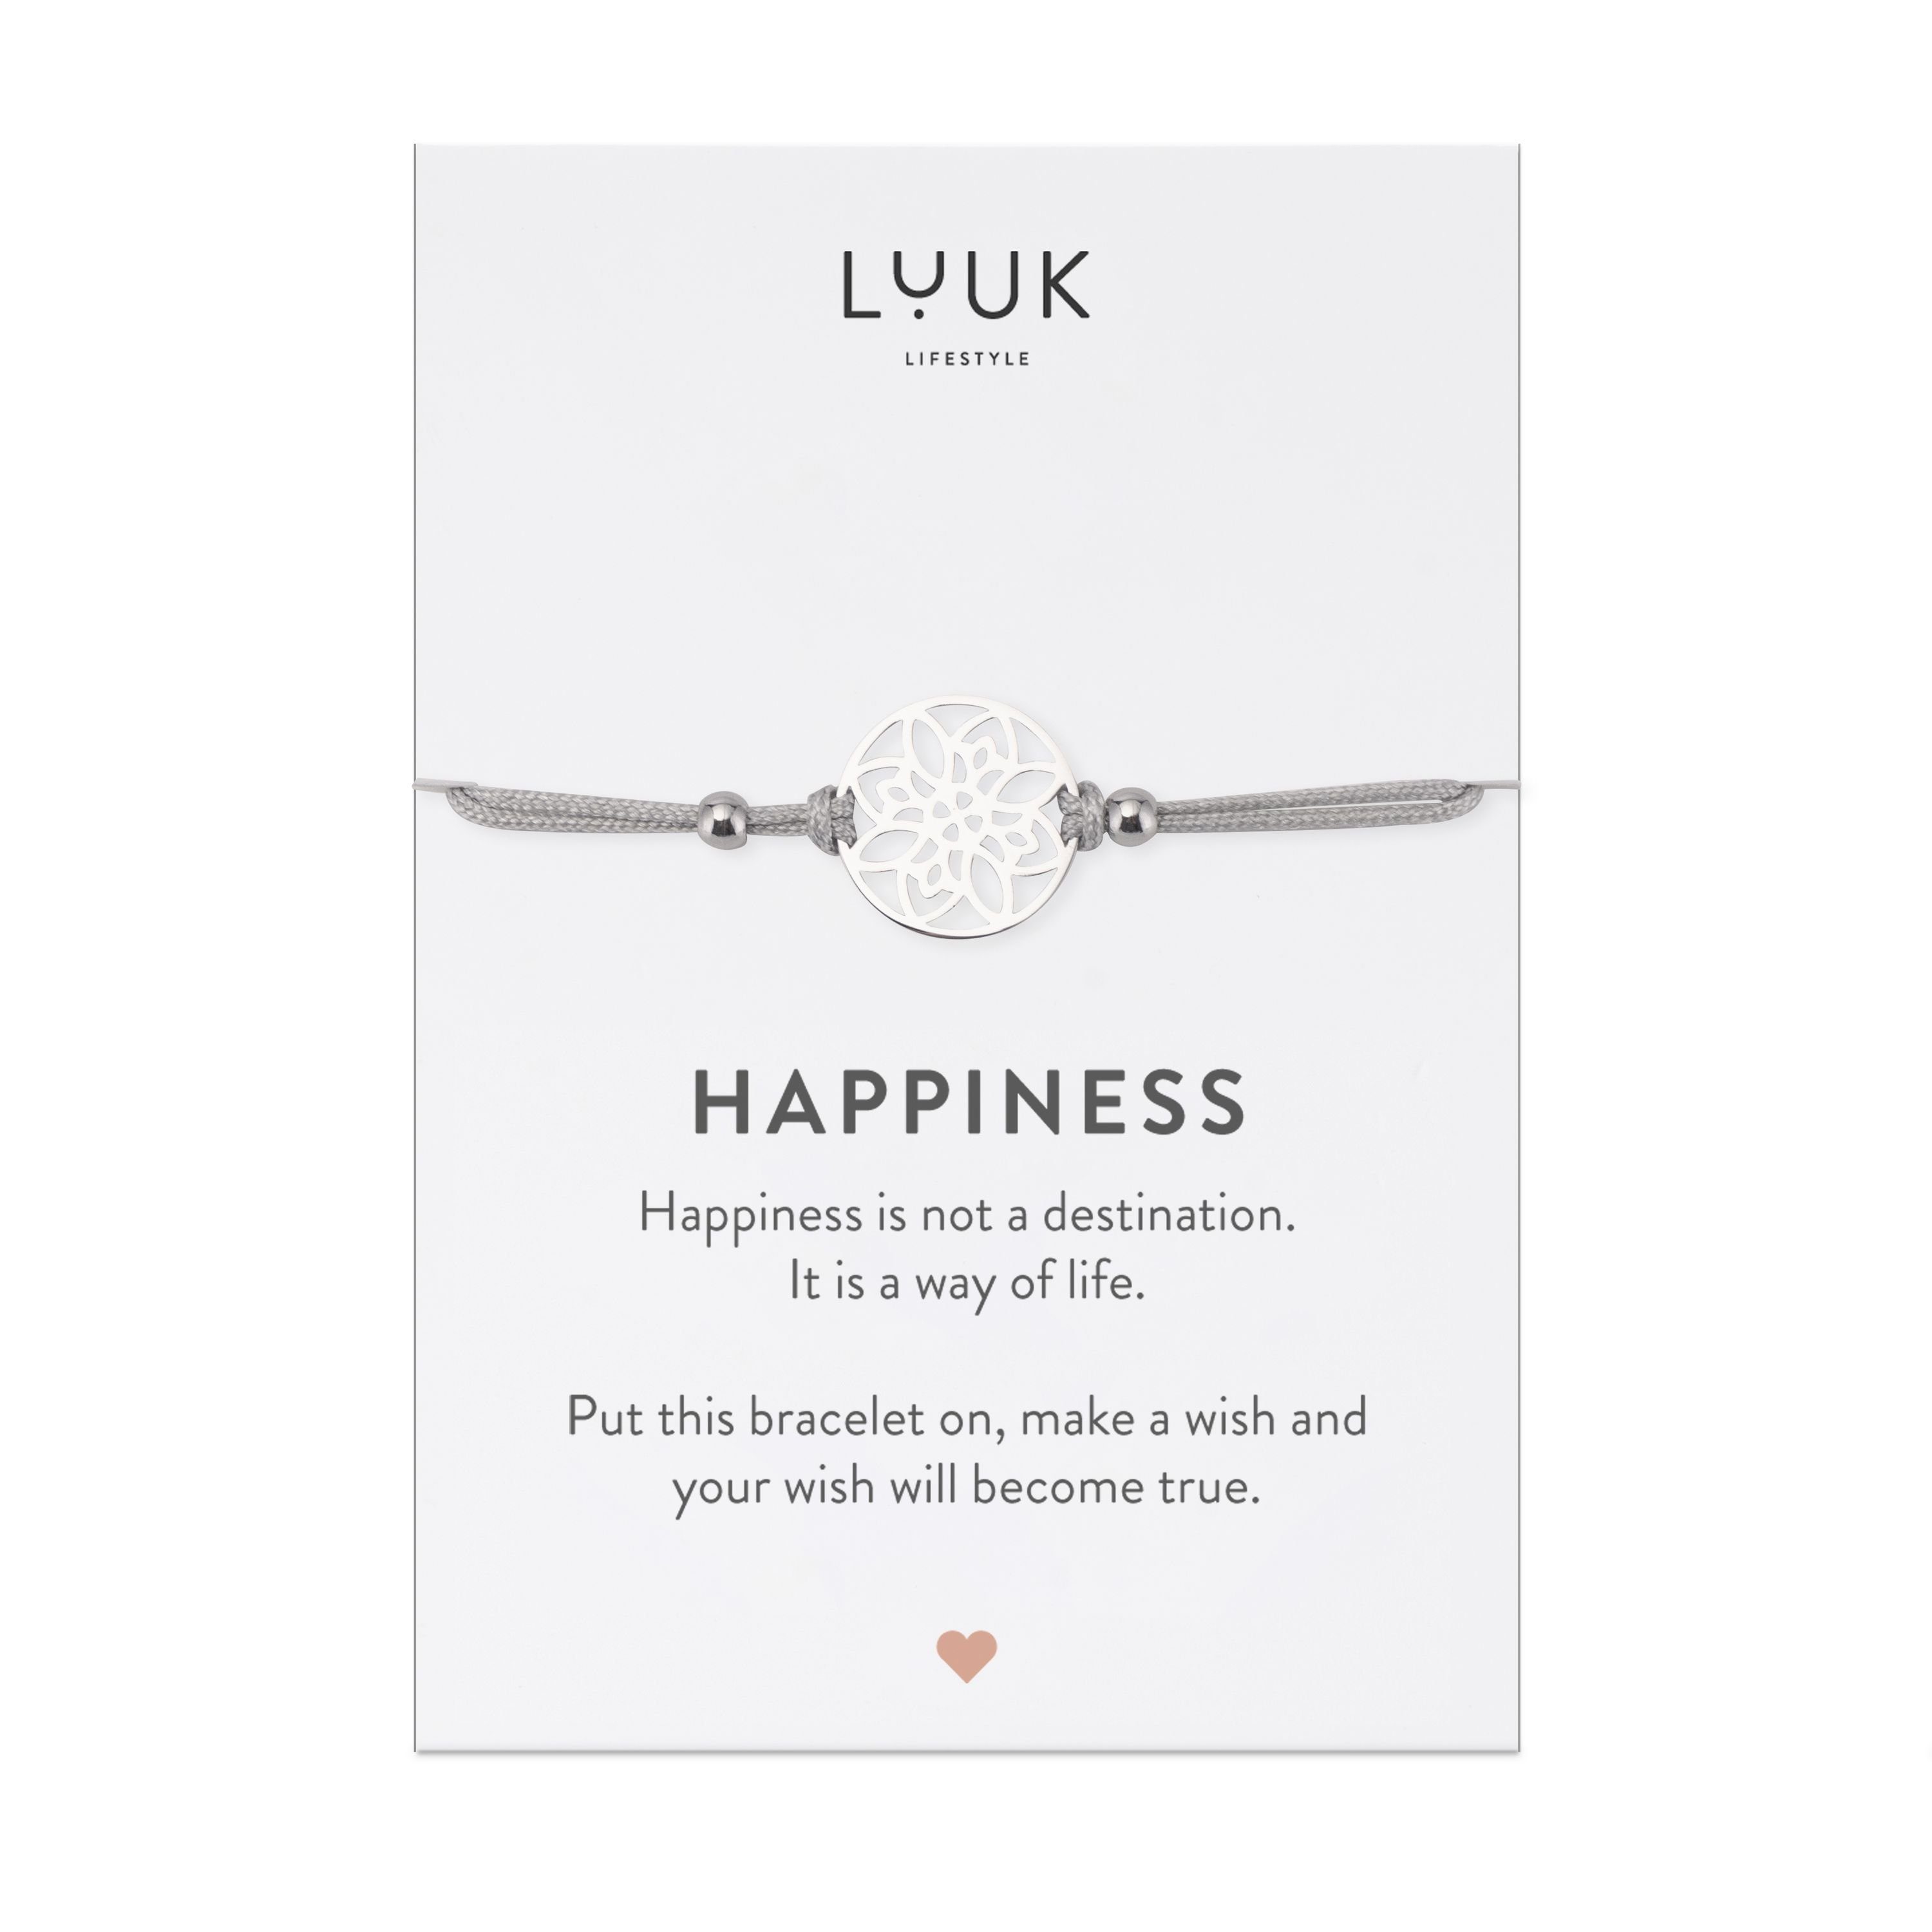 LUUK LIFESTYLE Freundschaftsarmband Blume, handmade, Spruchkarte Silber mit Happiness